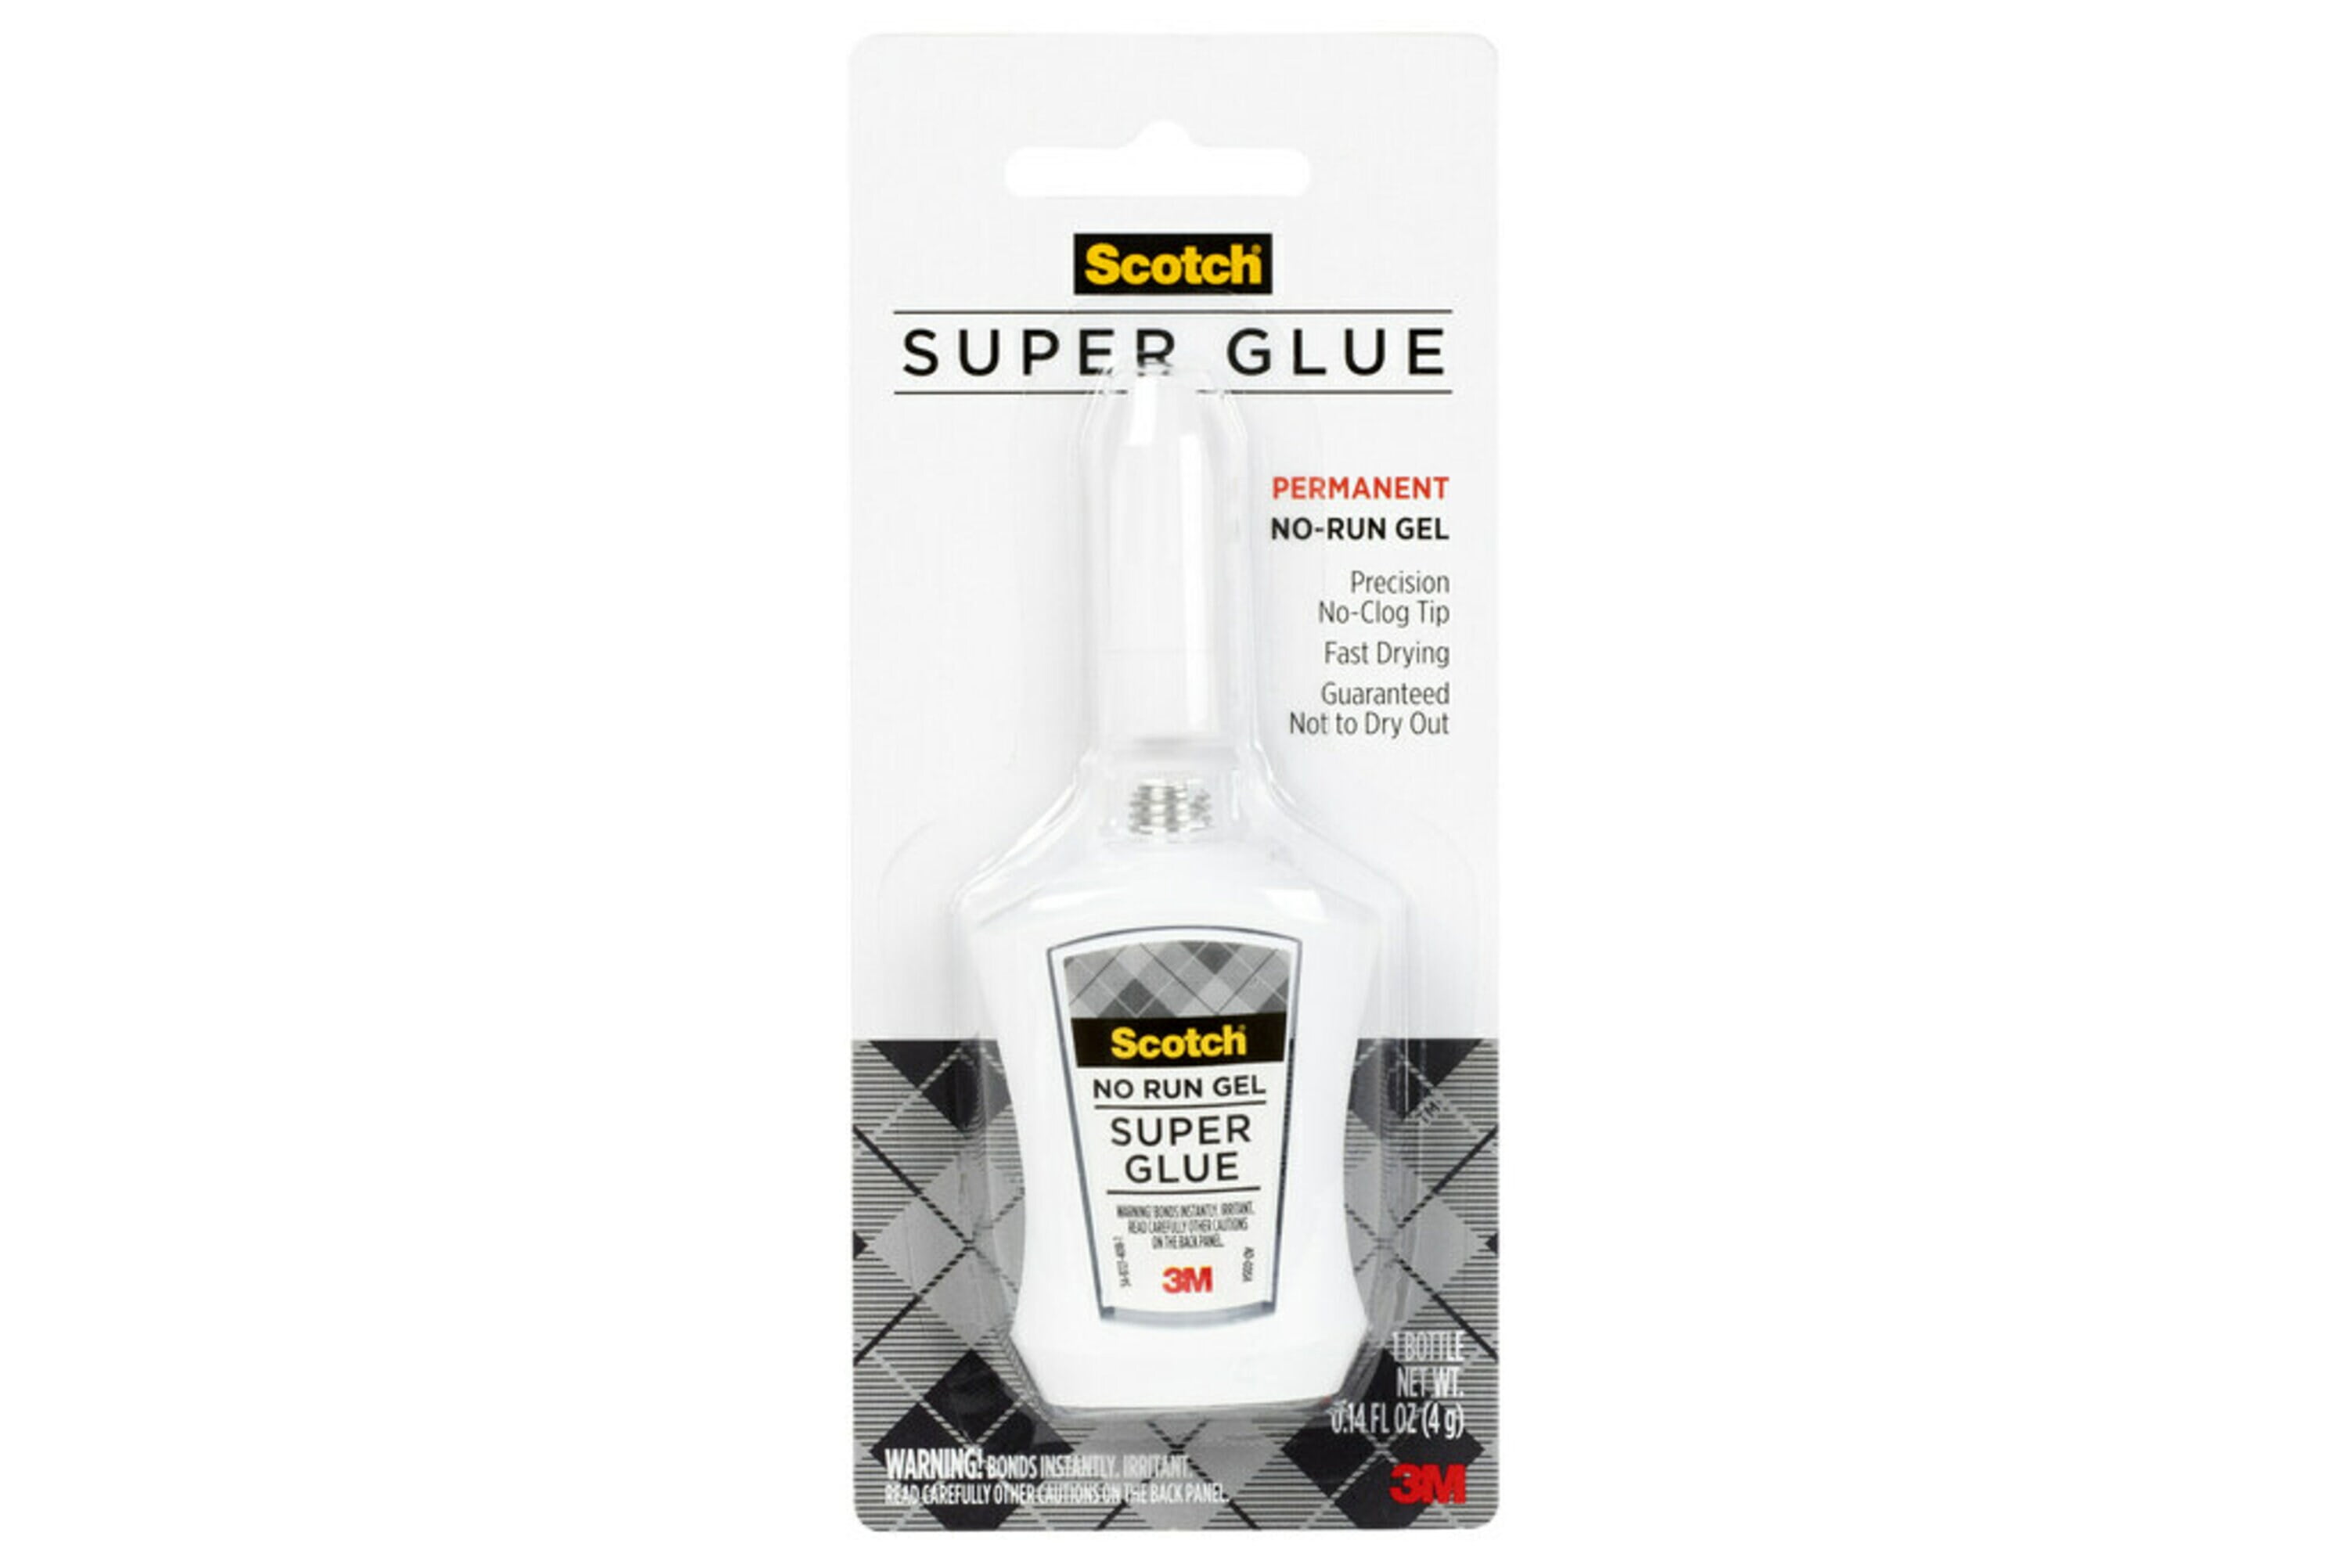 Buy Scotch Permanent Glue Stick 8 g Online